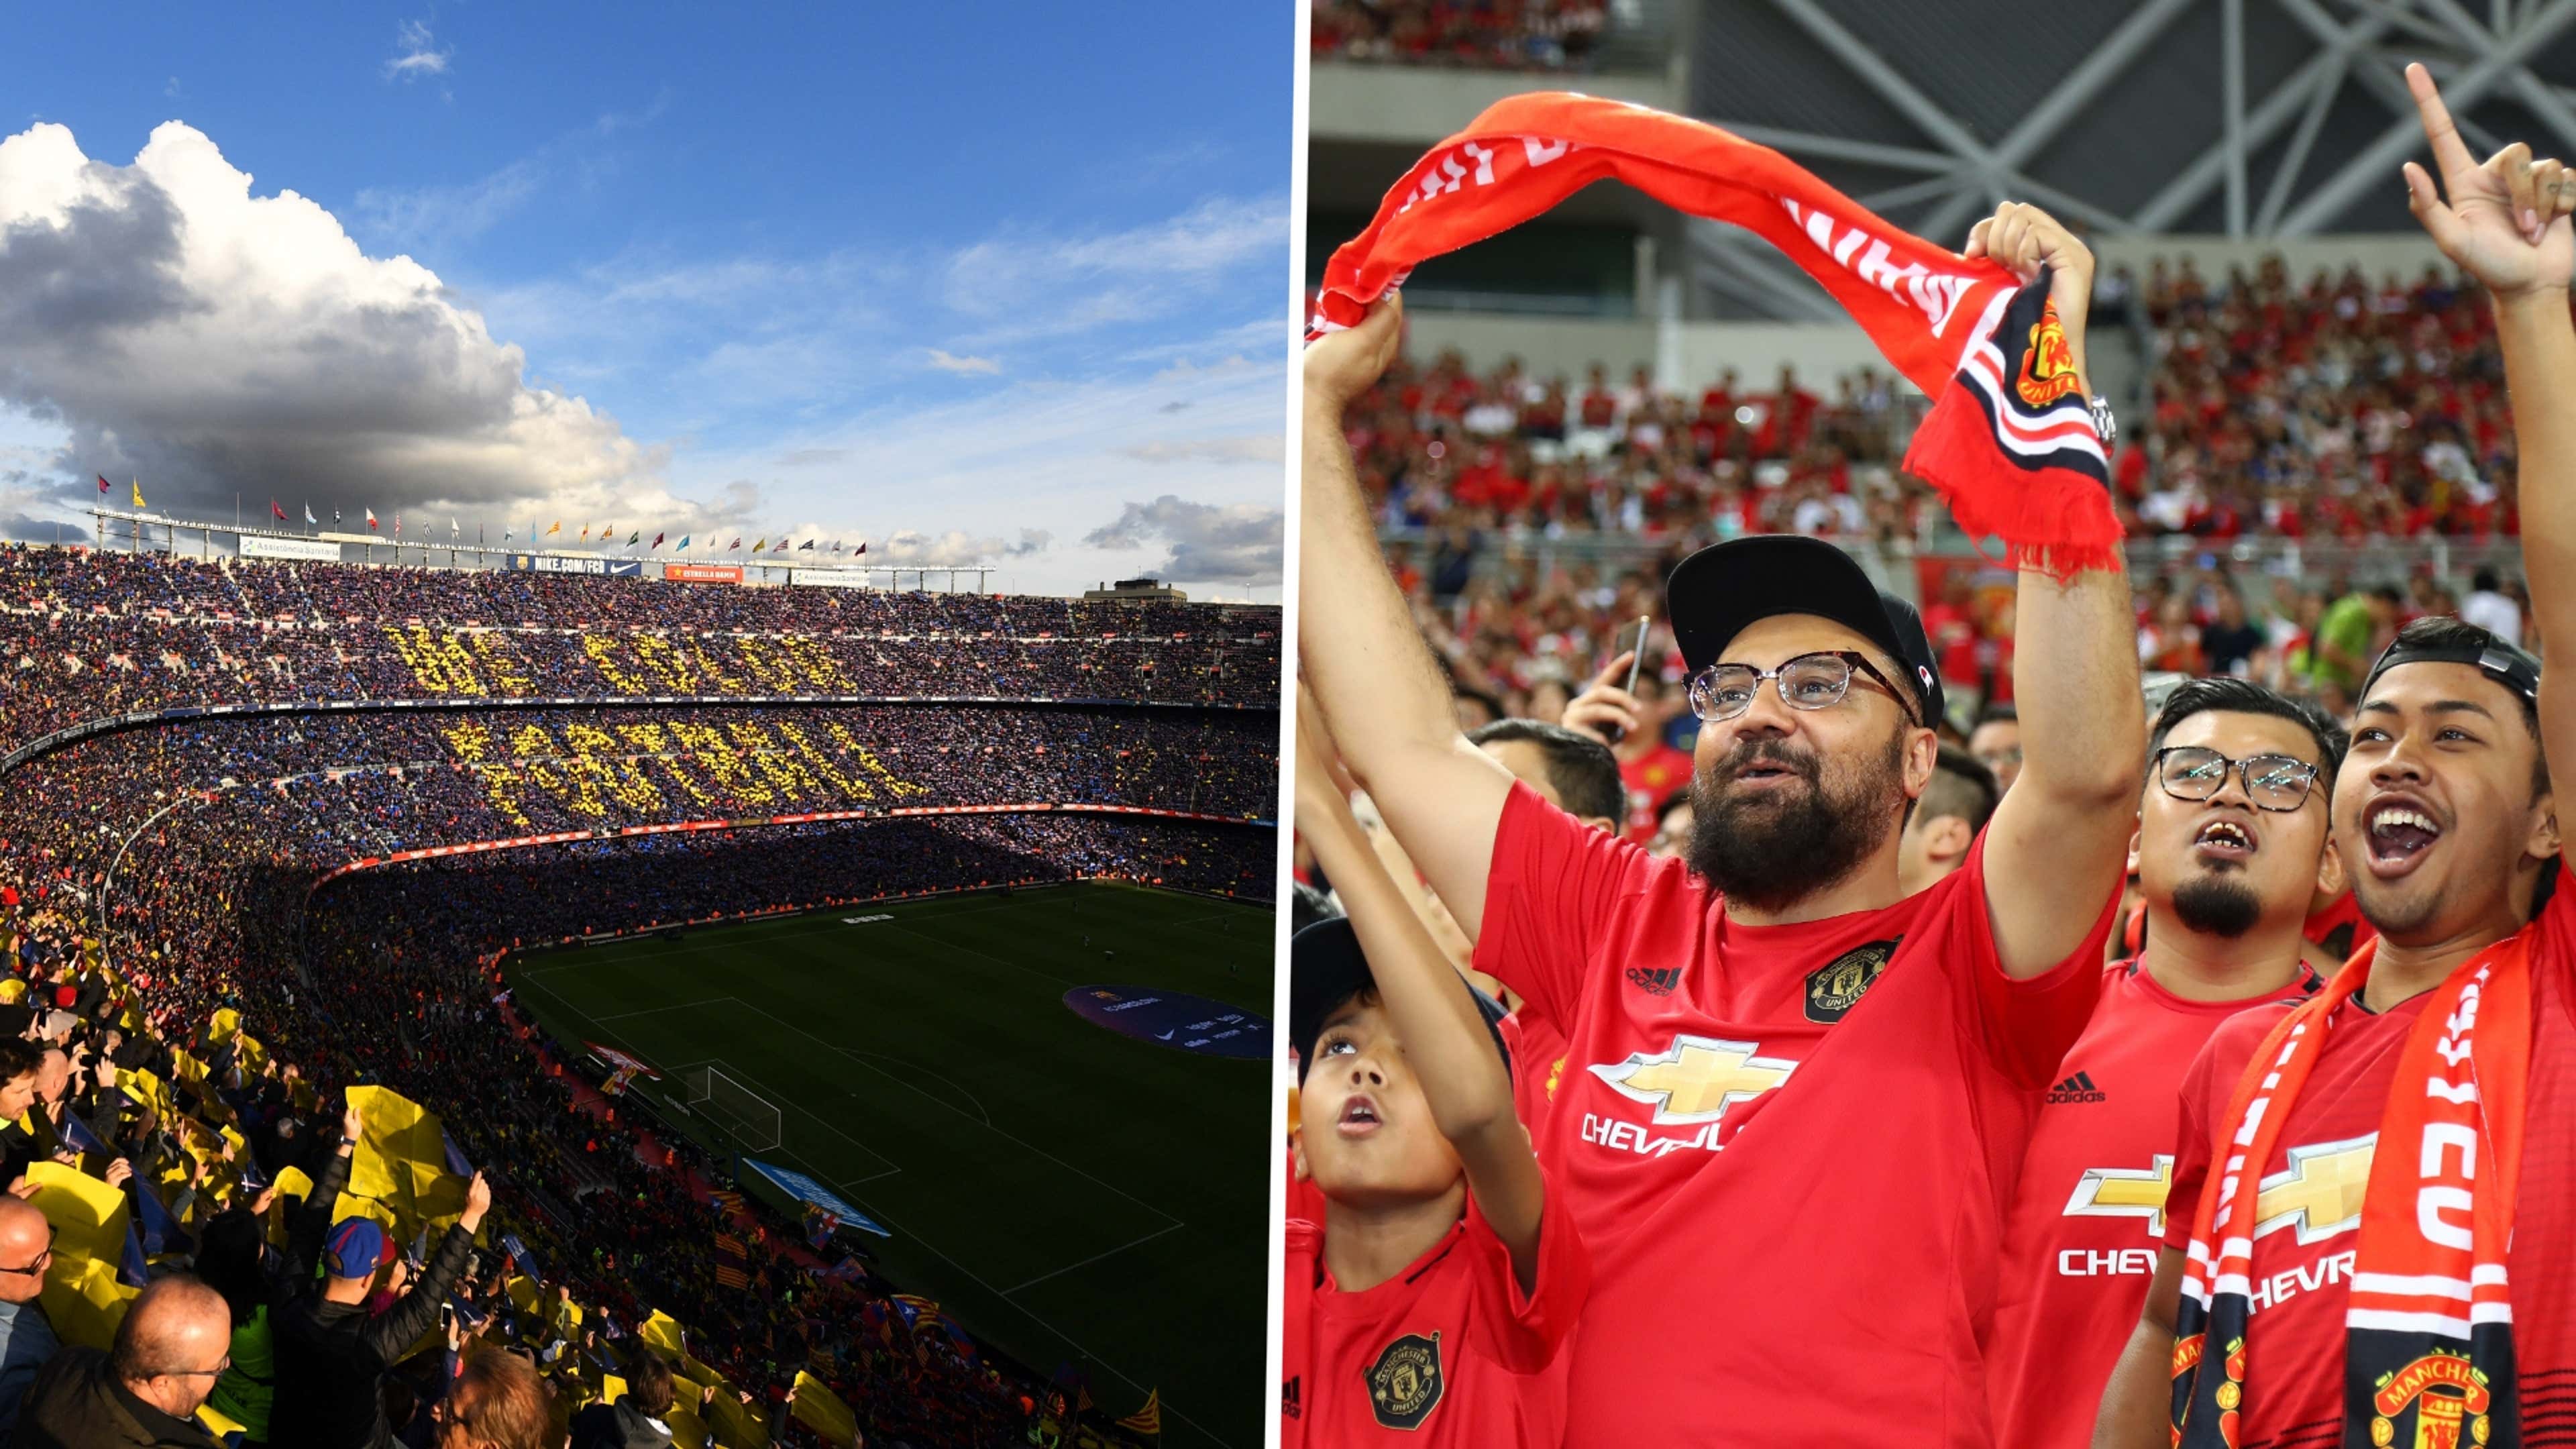 10 Best Football Clubs In Spain